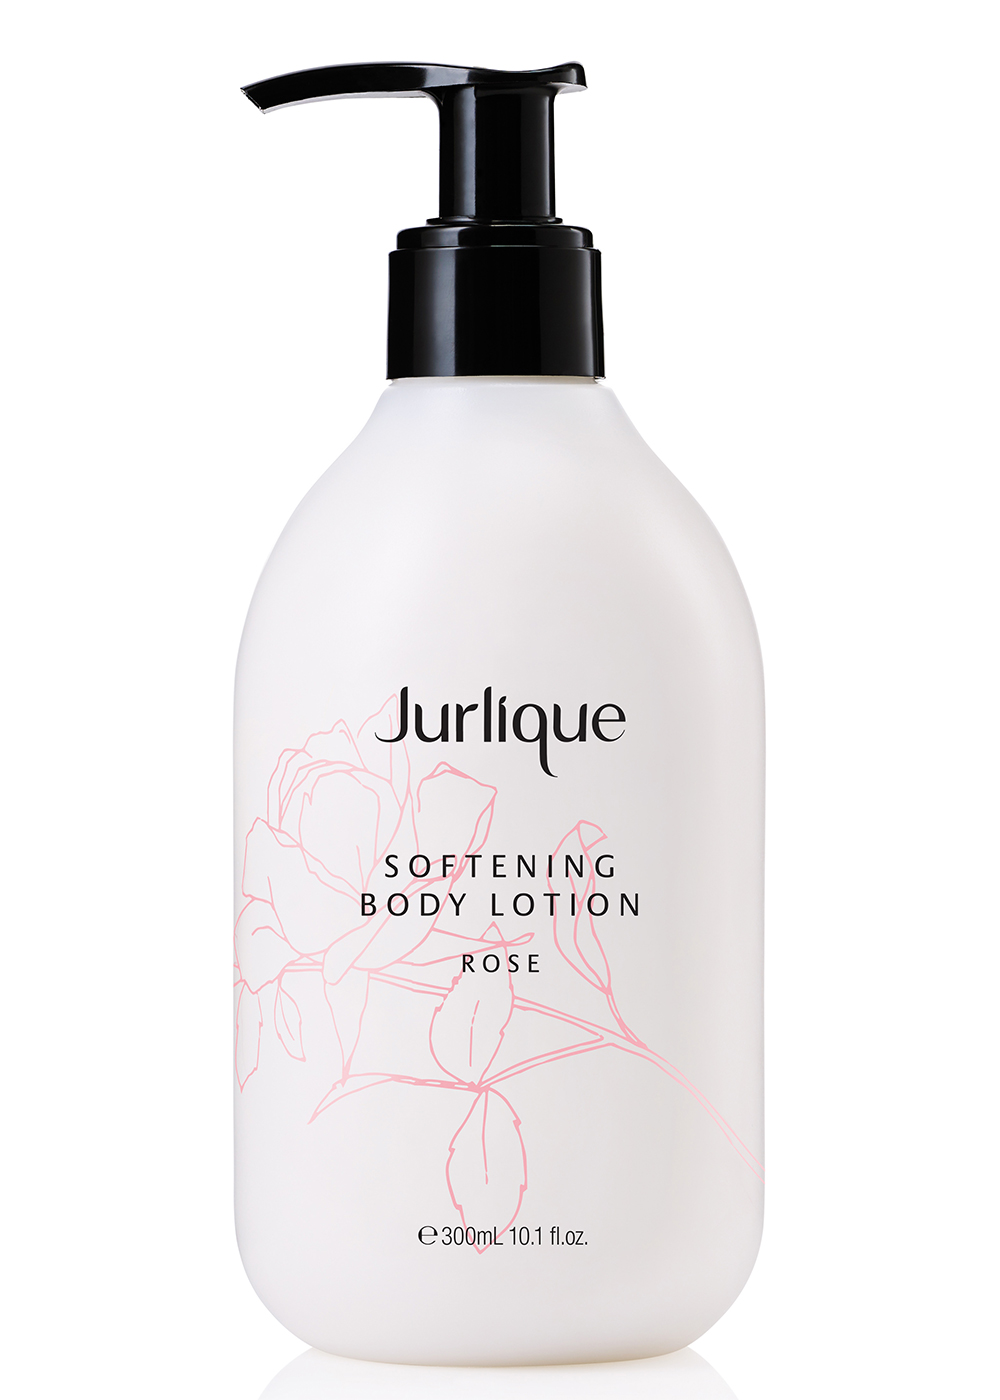 Jurlique – Softening Rose Body Lotion